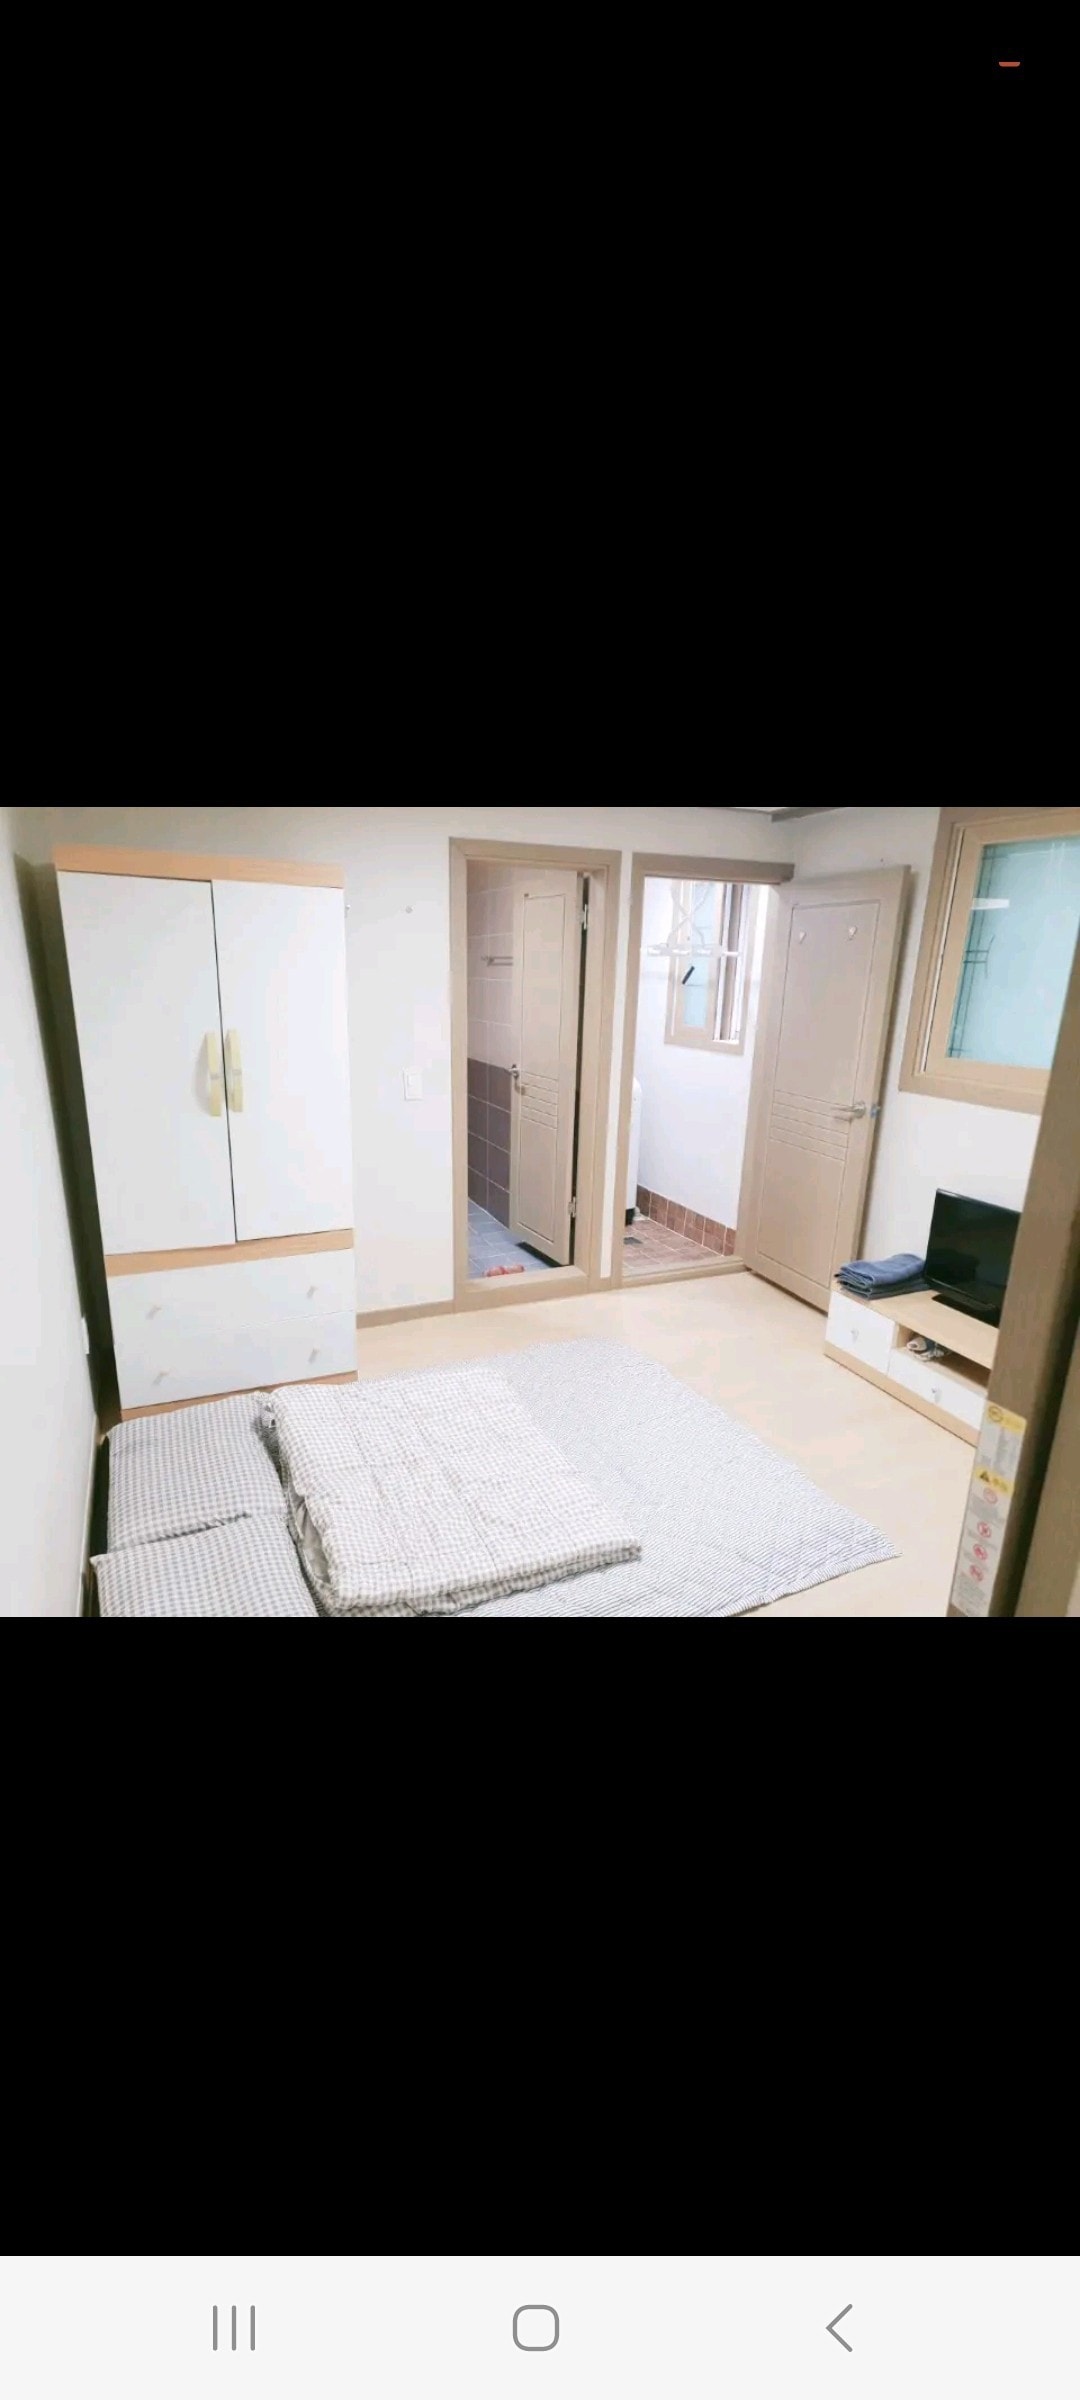 304 Pyeongtaek Songtan Seojeong-dong全新单人房全套可供长期短期住宿